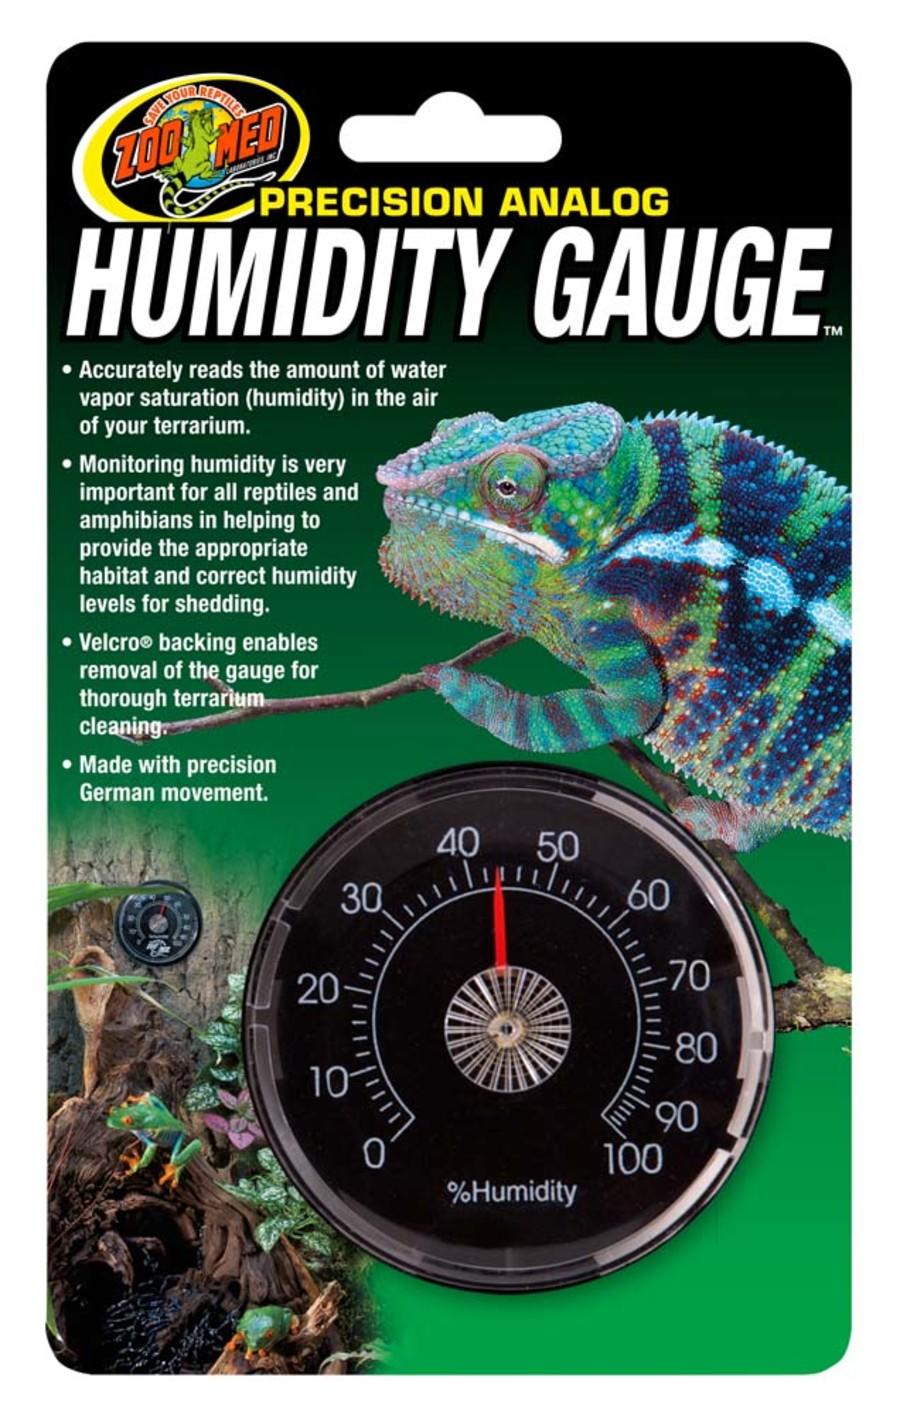 Analog Humidity Gauge